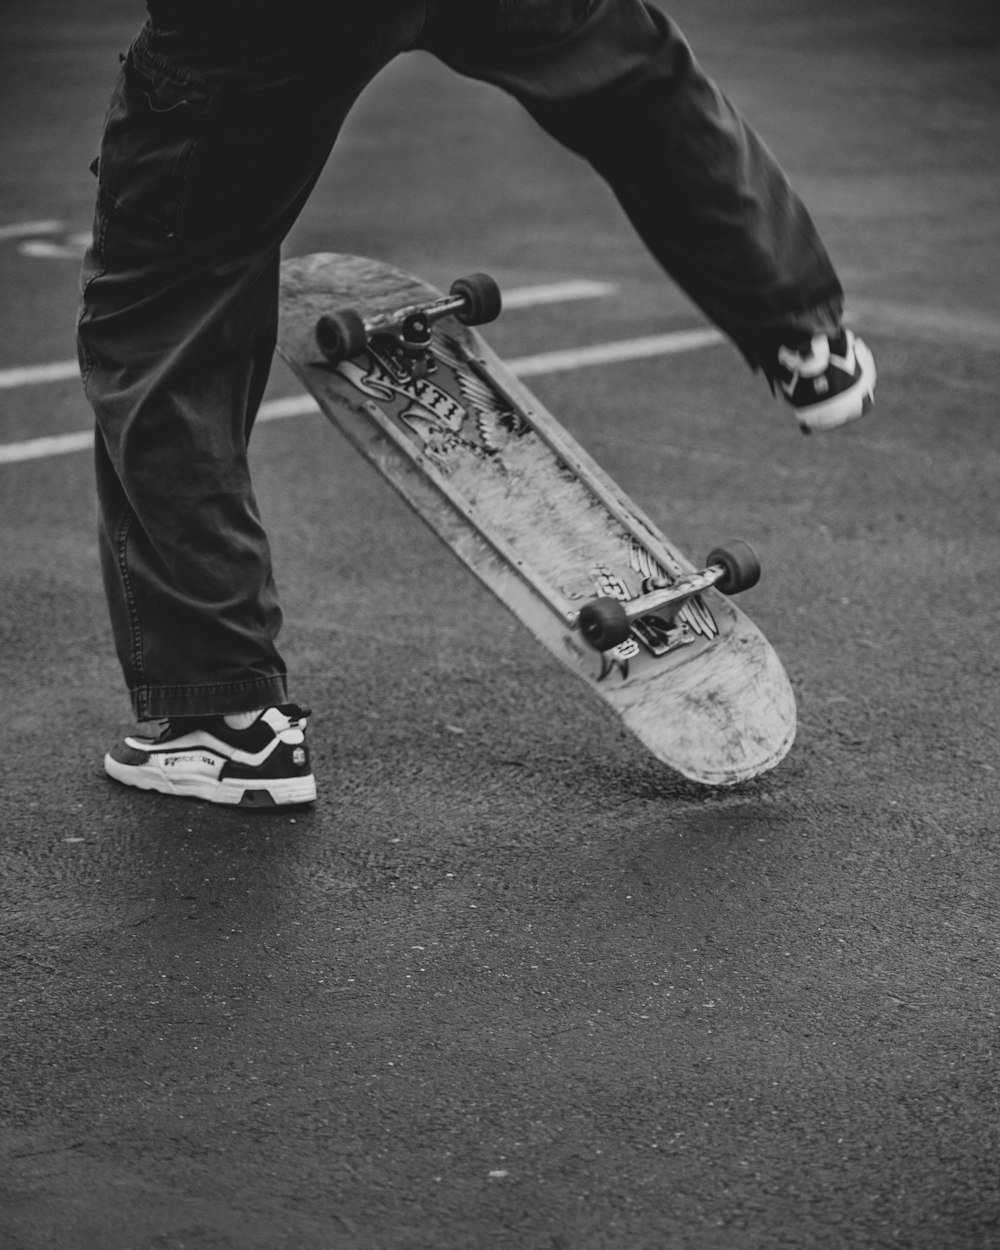 grayscale photo of man riding skateboard